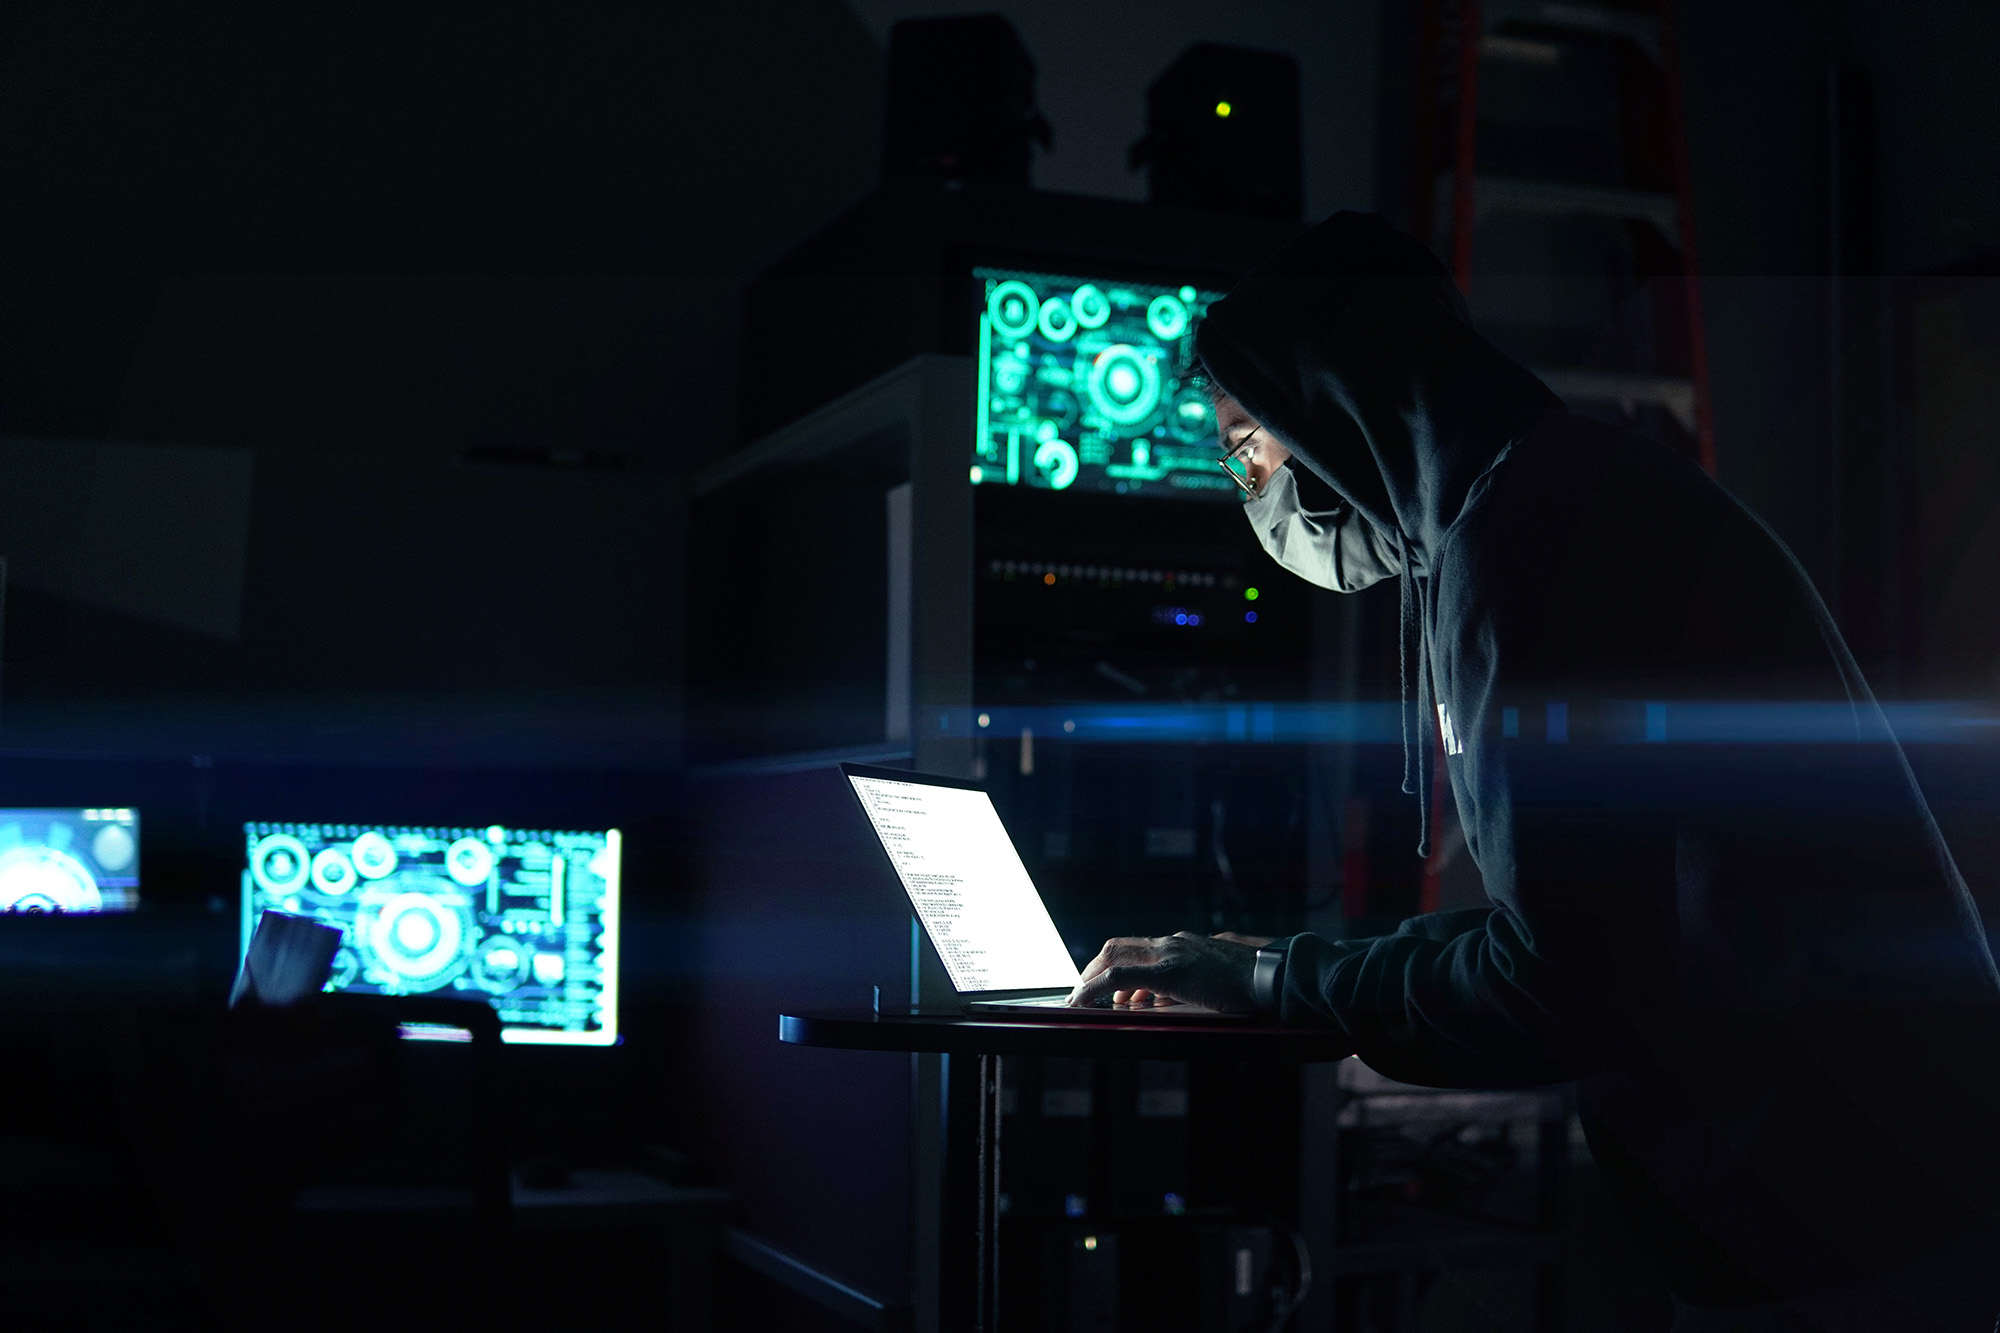 Person using laptop computer in dark room